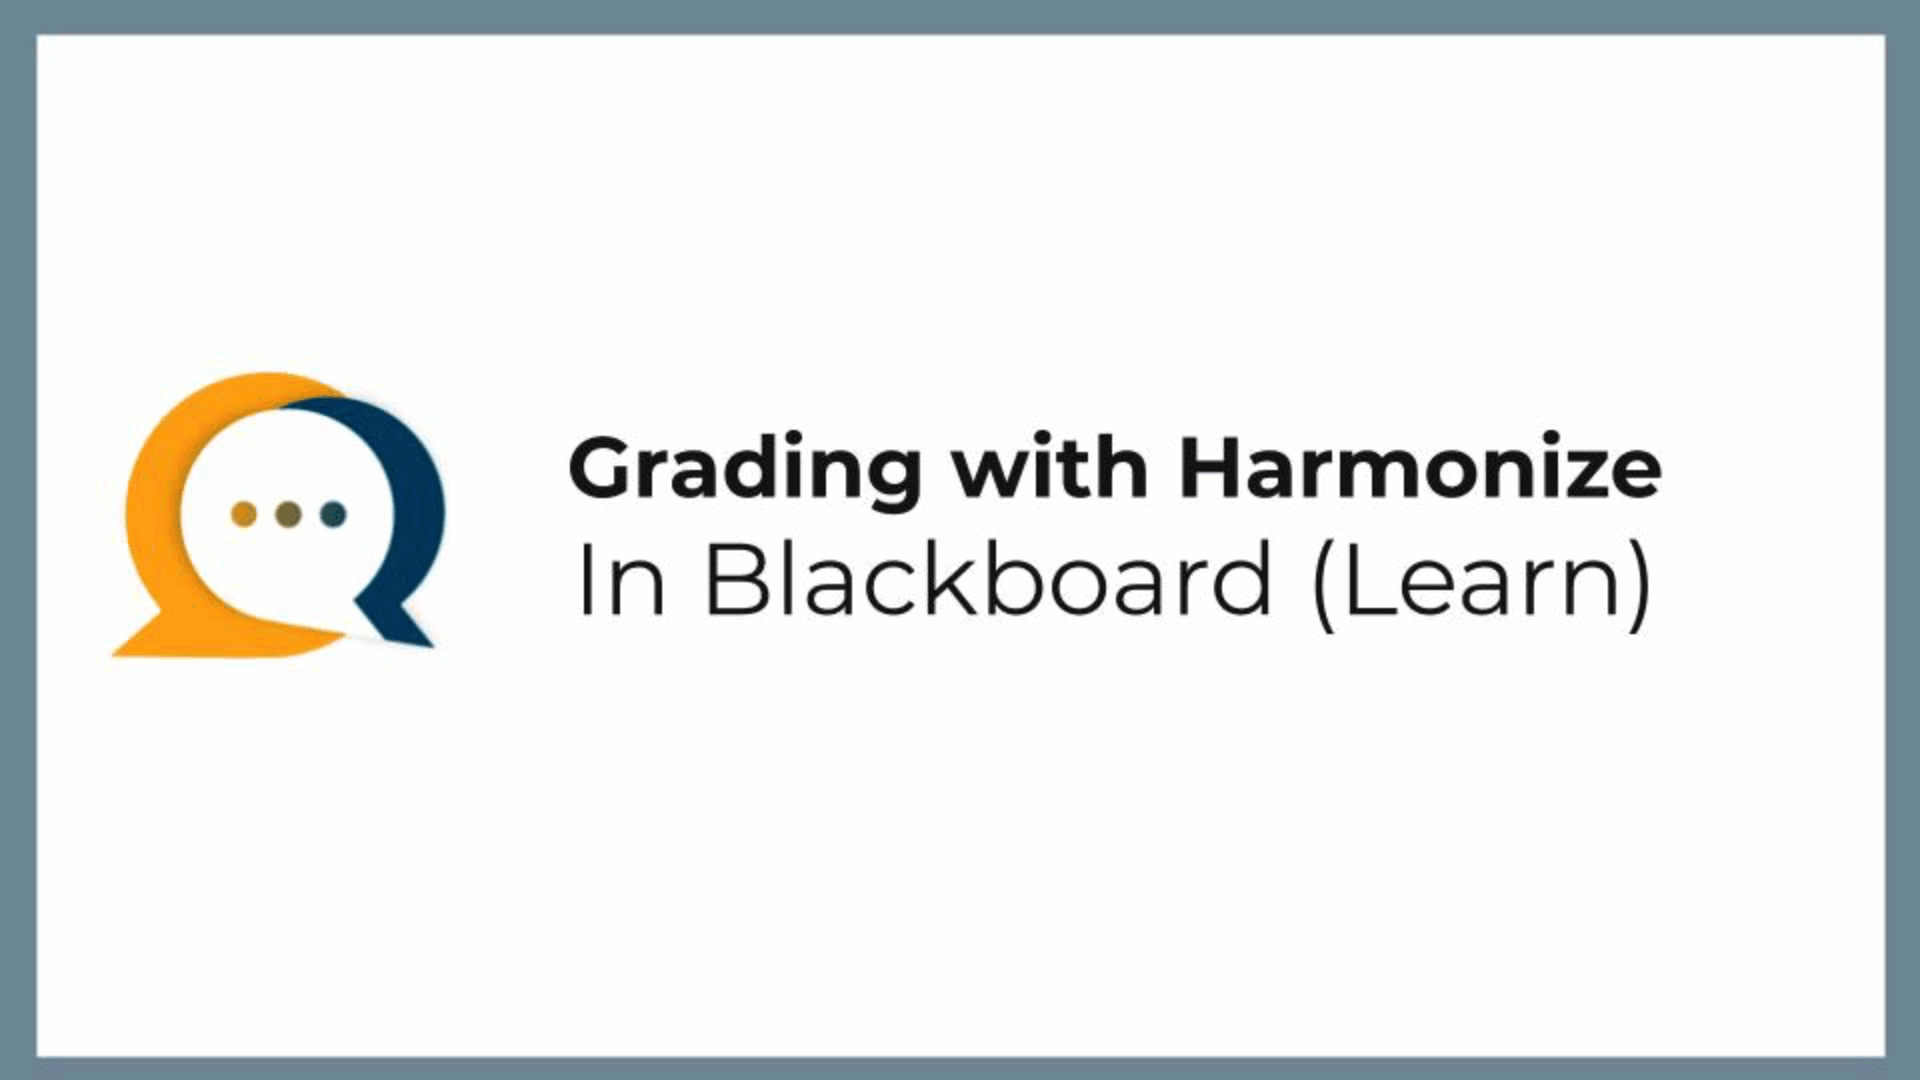 Animation showing setup of gradable Harmonize topic in Blackboard